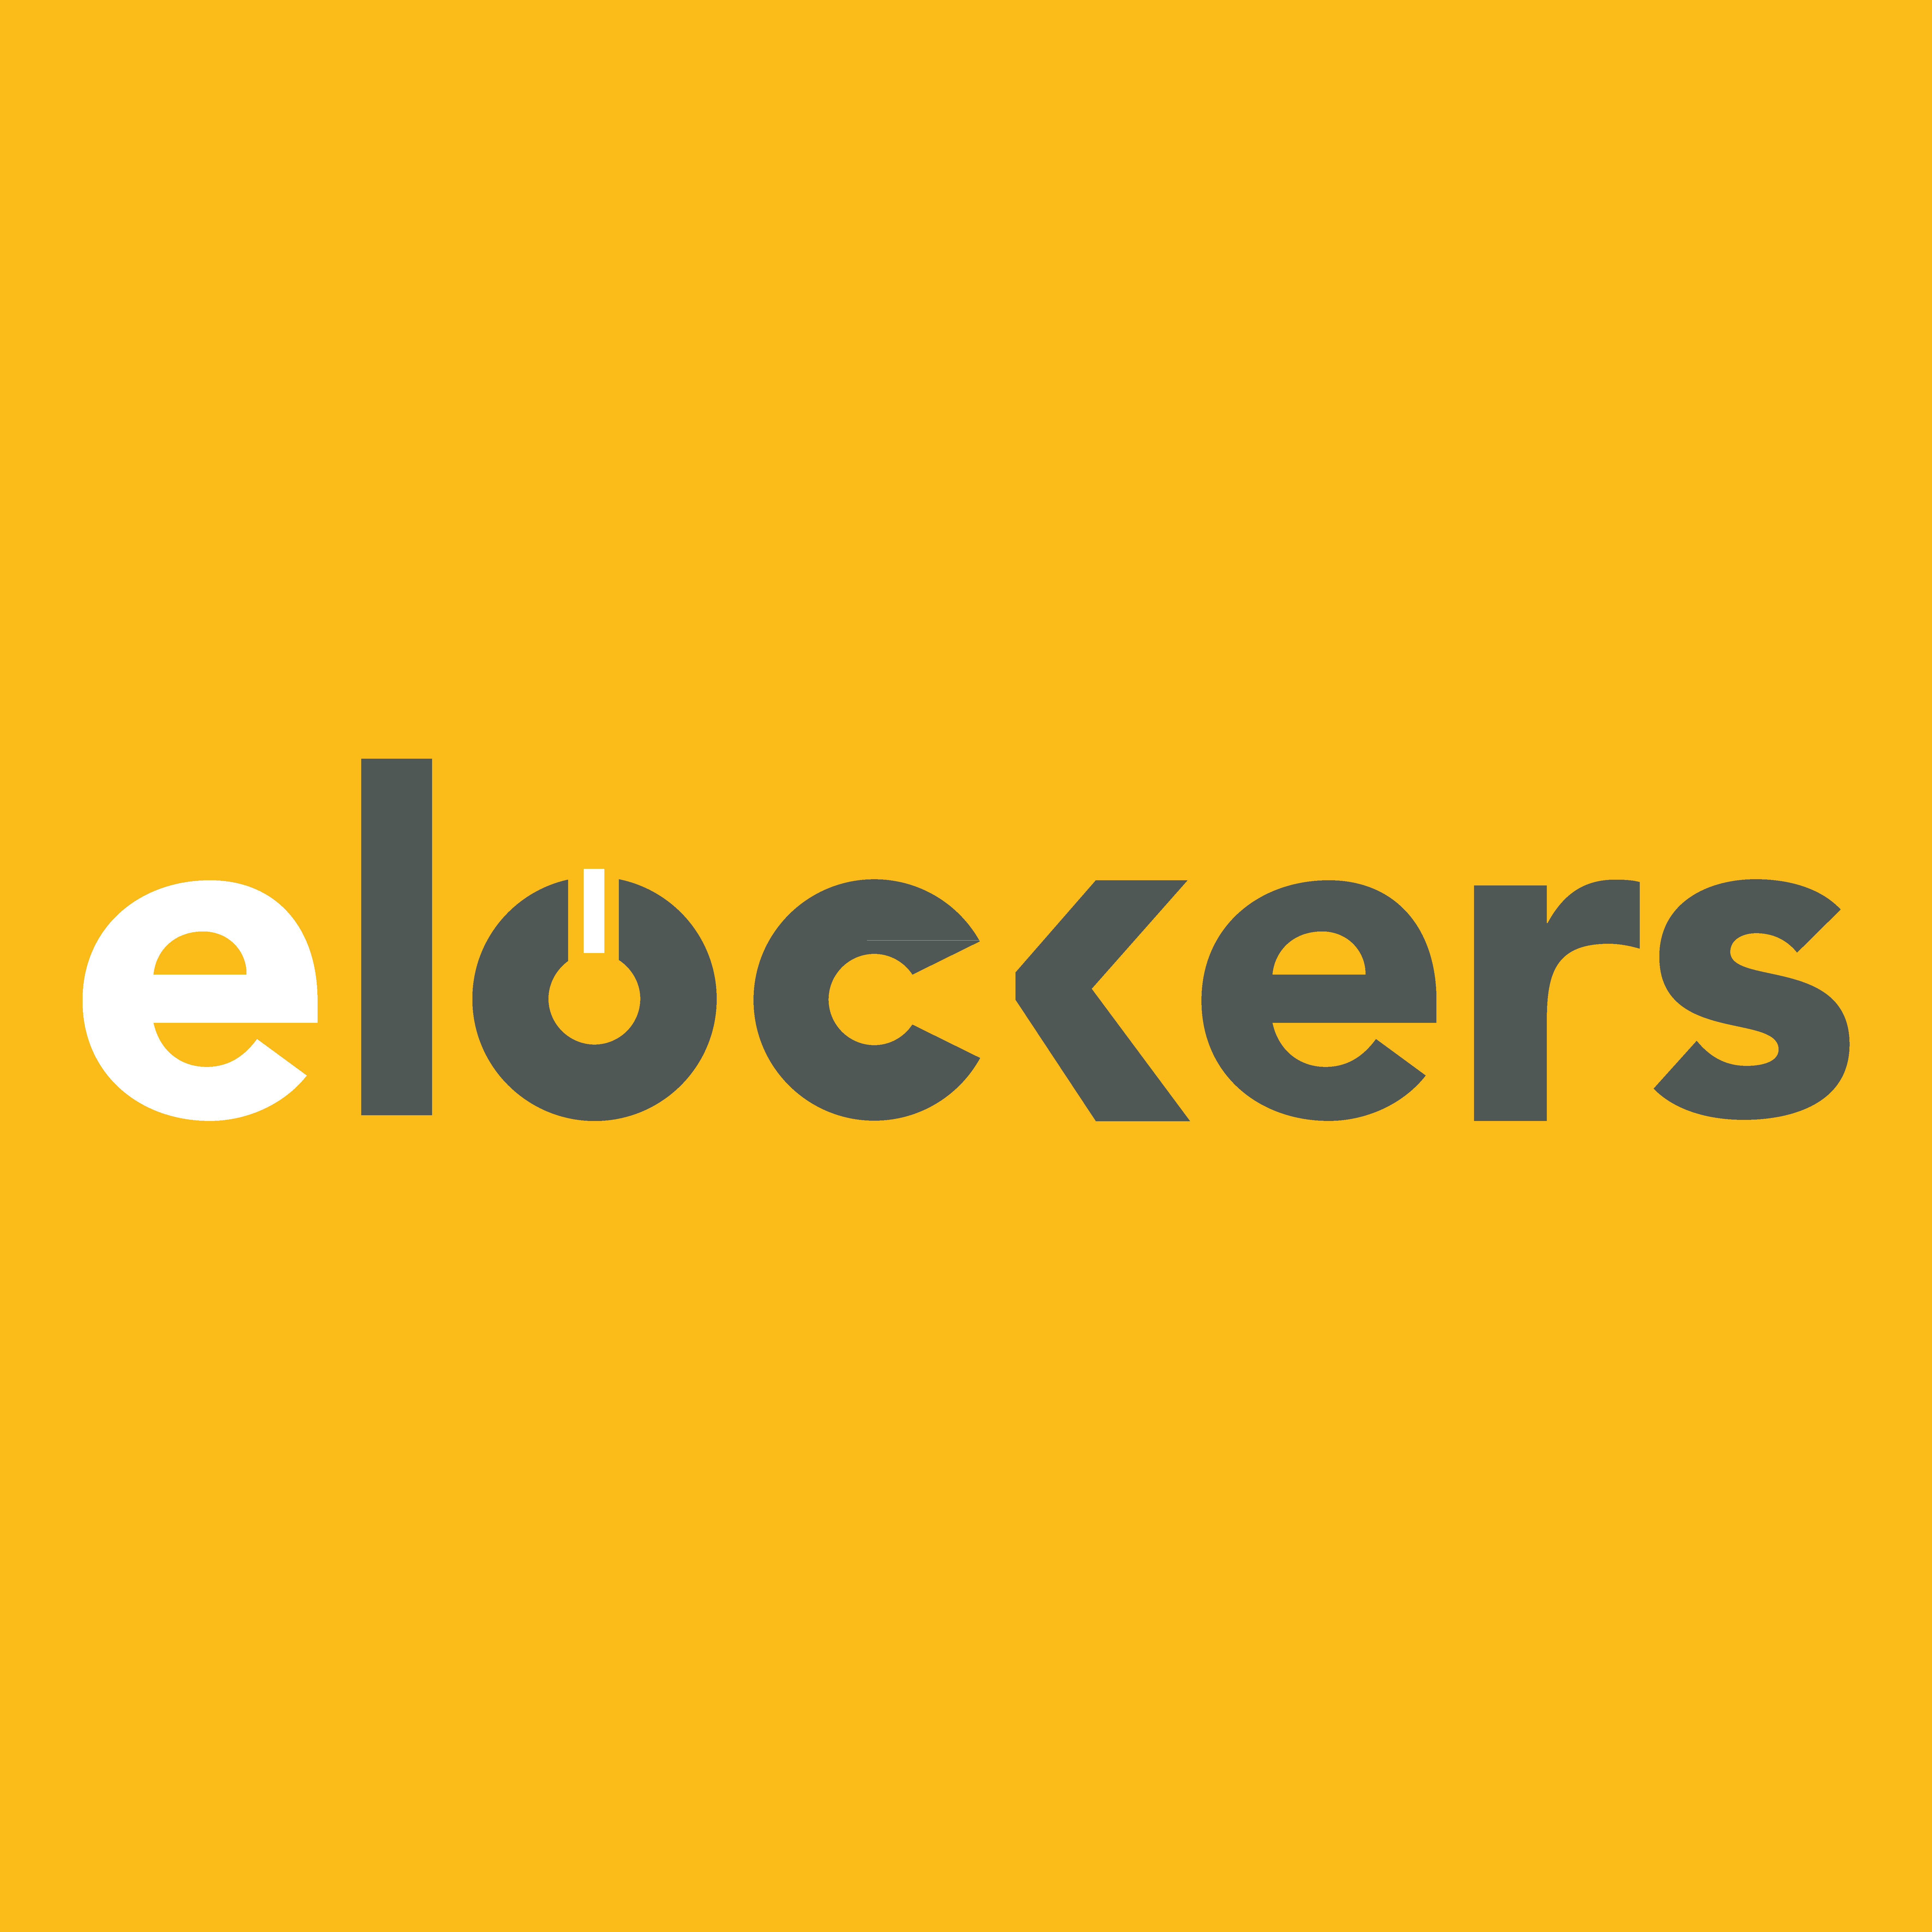 elockers